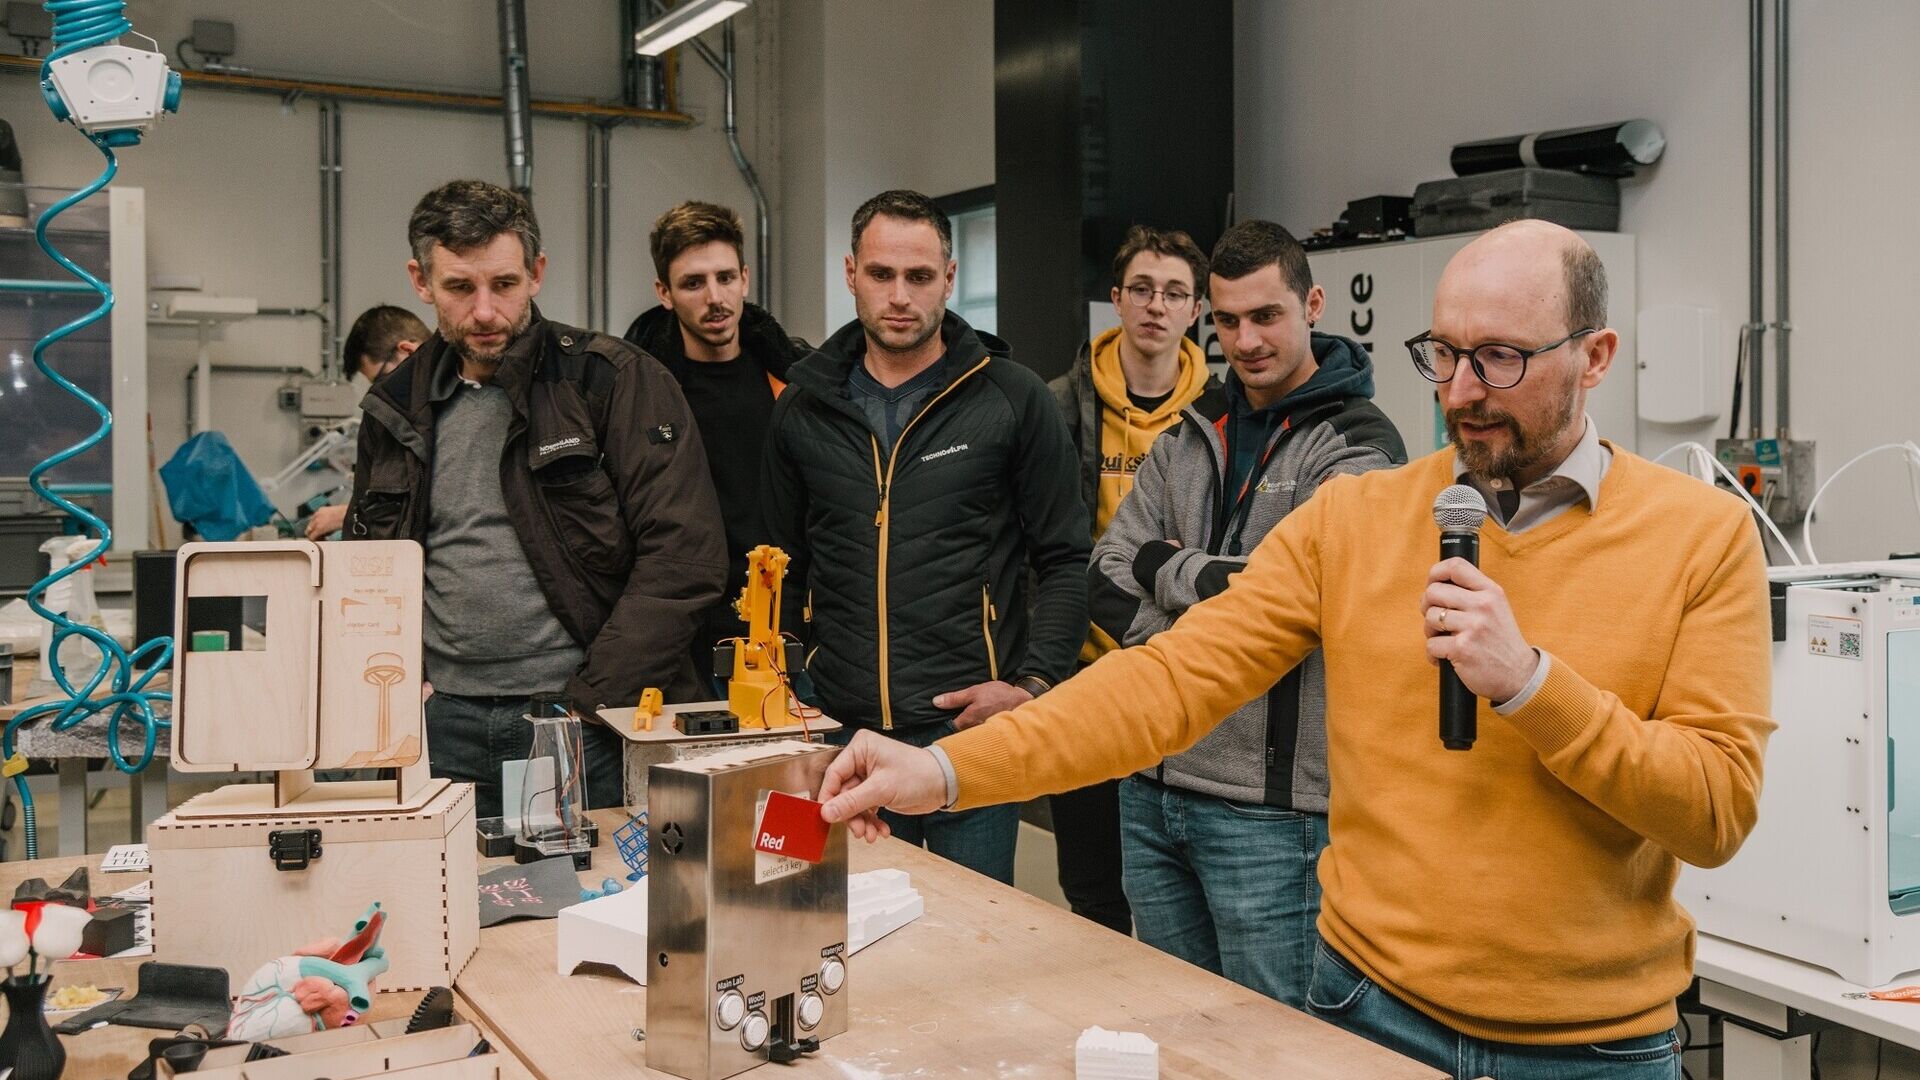 Maker Space: ความร่วมมือระหว่าง Apprenticeship และ Master Craftsman Office of the Autonomous Province of Bolzano, lvh.apa และ NOI Techpark ได้เปิดตัวเส้นทางที่ทุ่มเทให้กับความท้าทายใหม่ของการแปลงเป็นดิจิทัลสำหรับธุรกิจงานฝีมือ